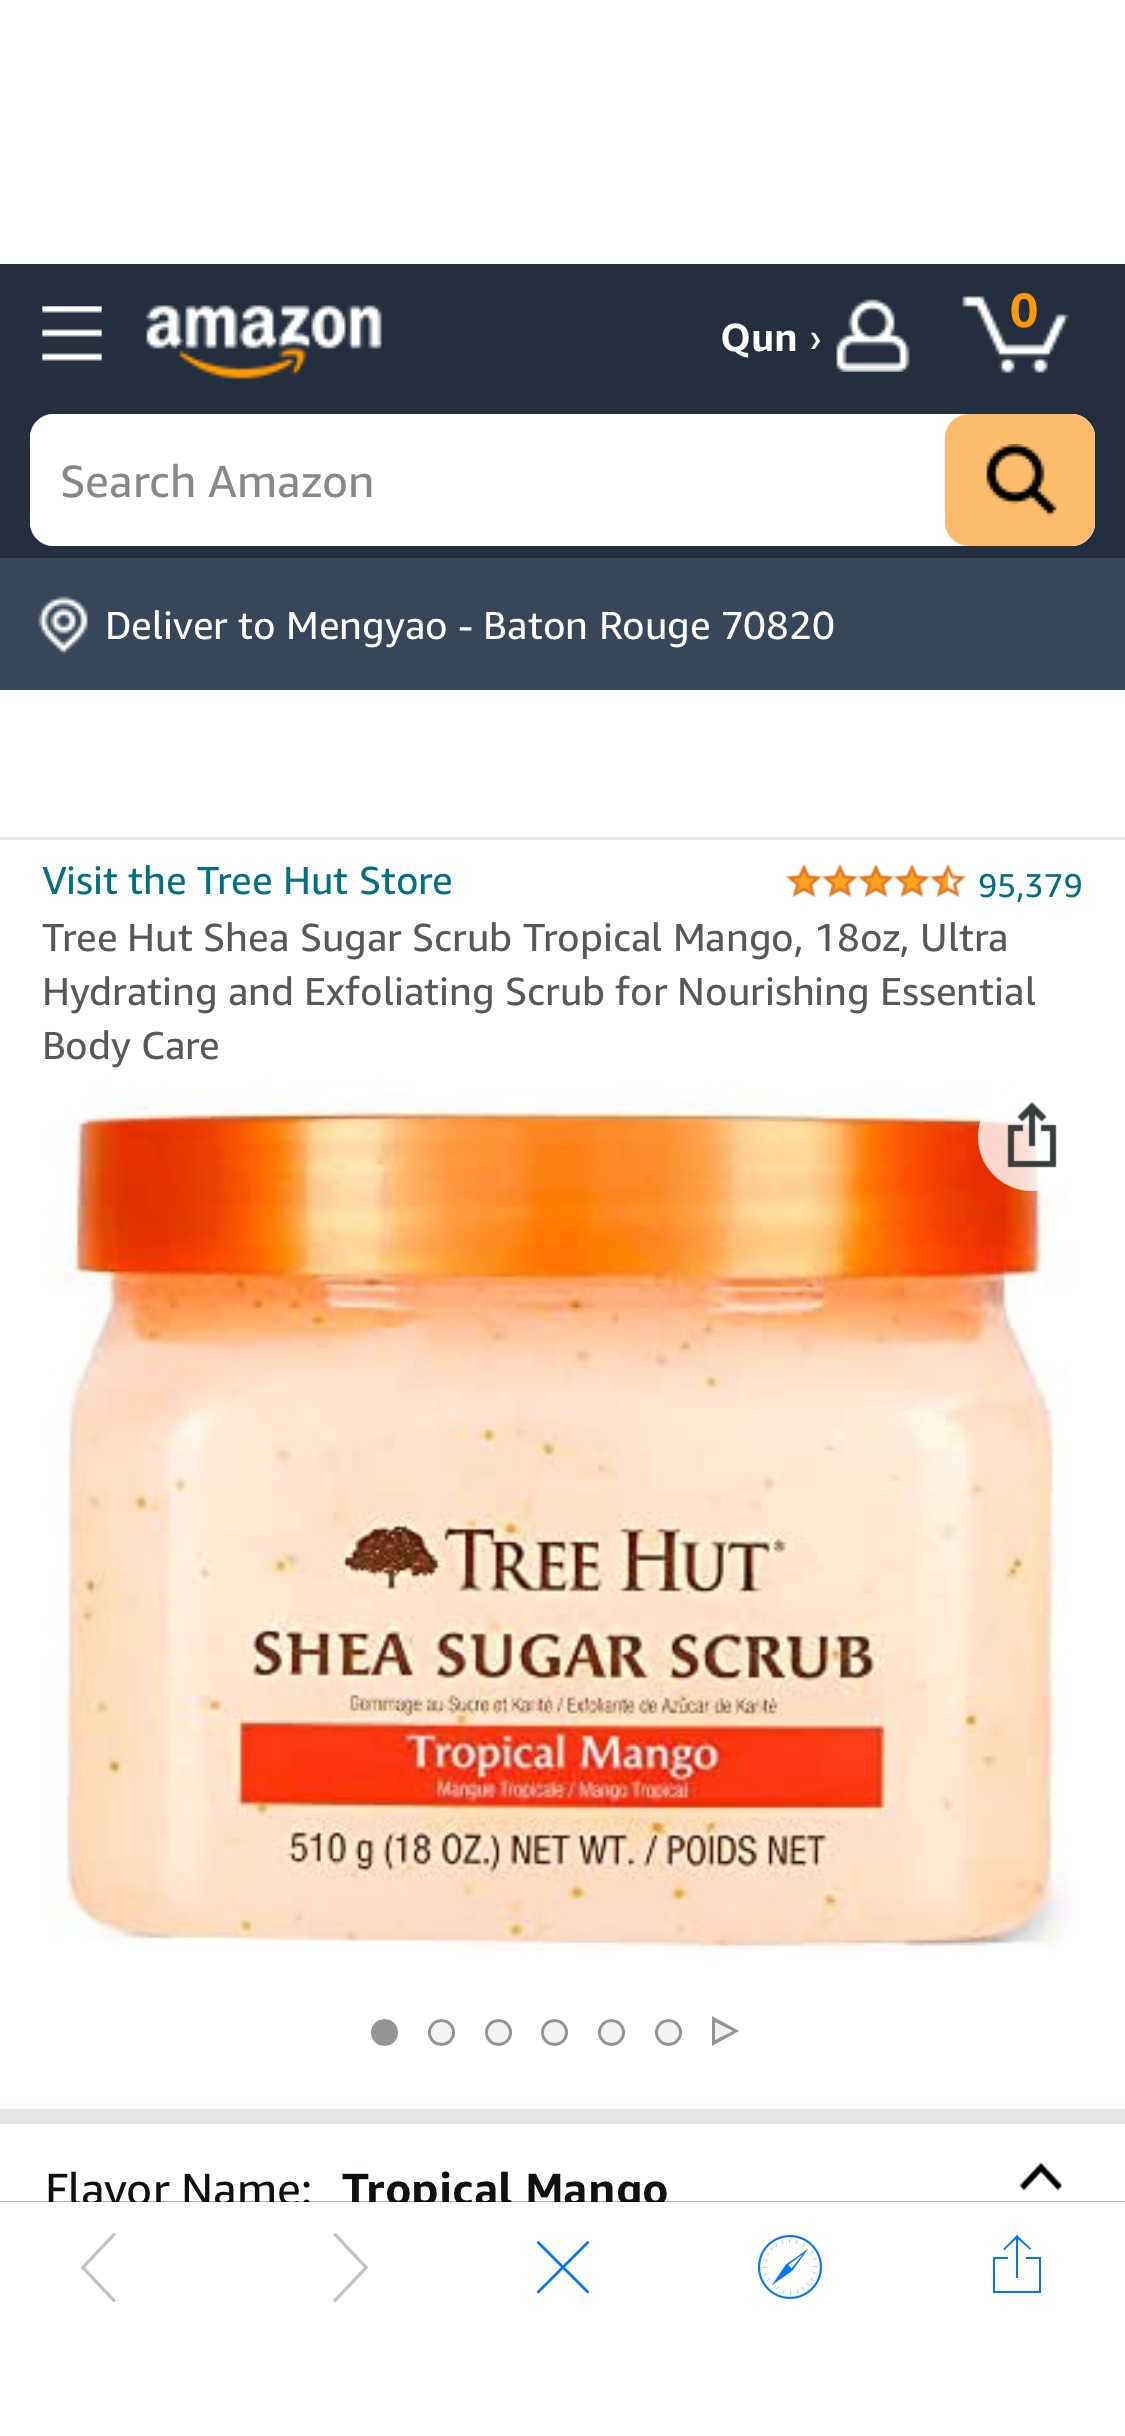 Amazon.com : Tree Hut Shea Sugar Scrub Tropical Mango, 18oz, Ultra Hydrating and Exfoliating Scrub for Nourishing Essential Body Care 磨砂膏: Beauty & Personal Care